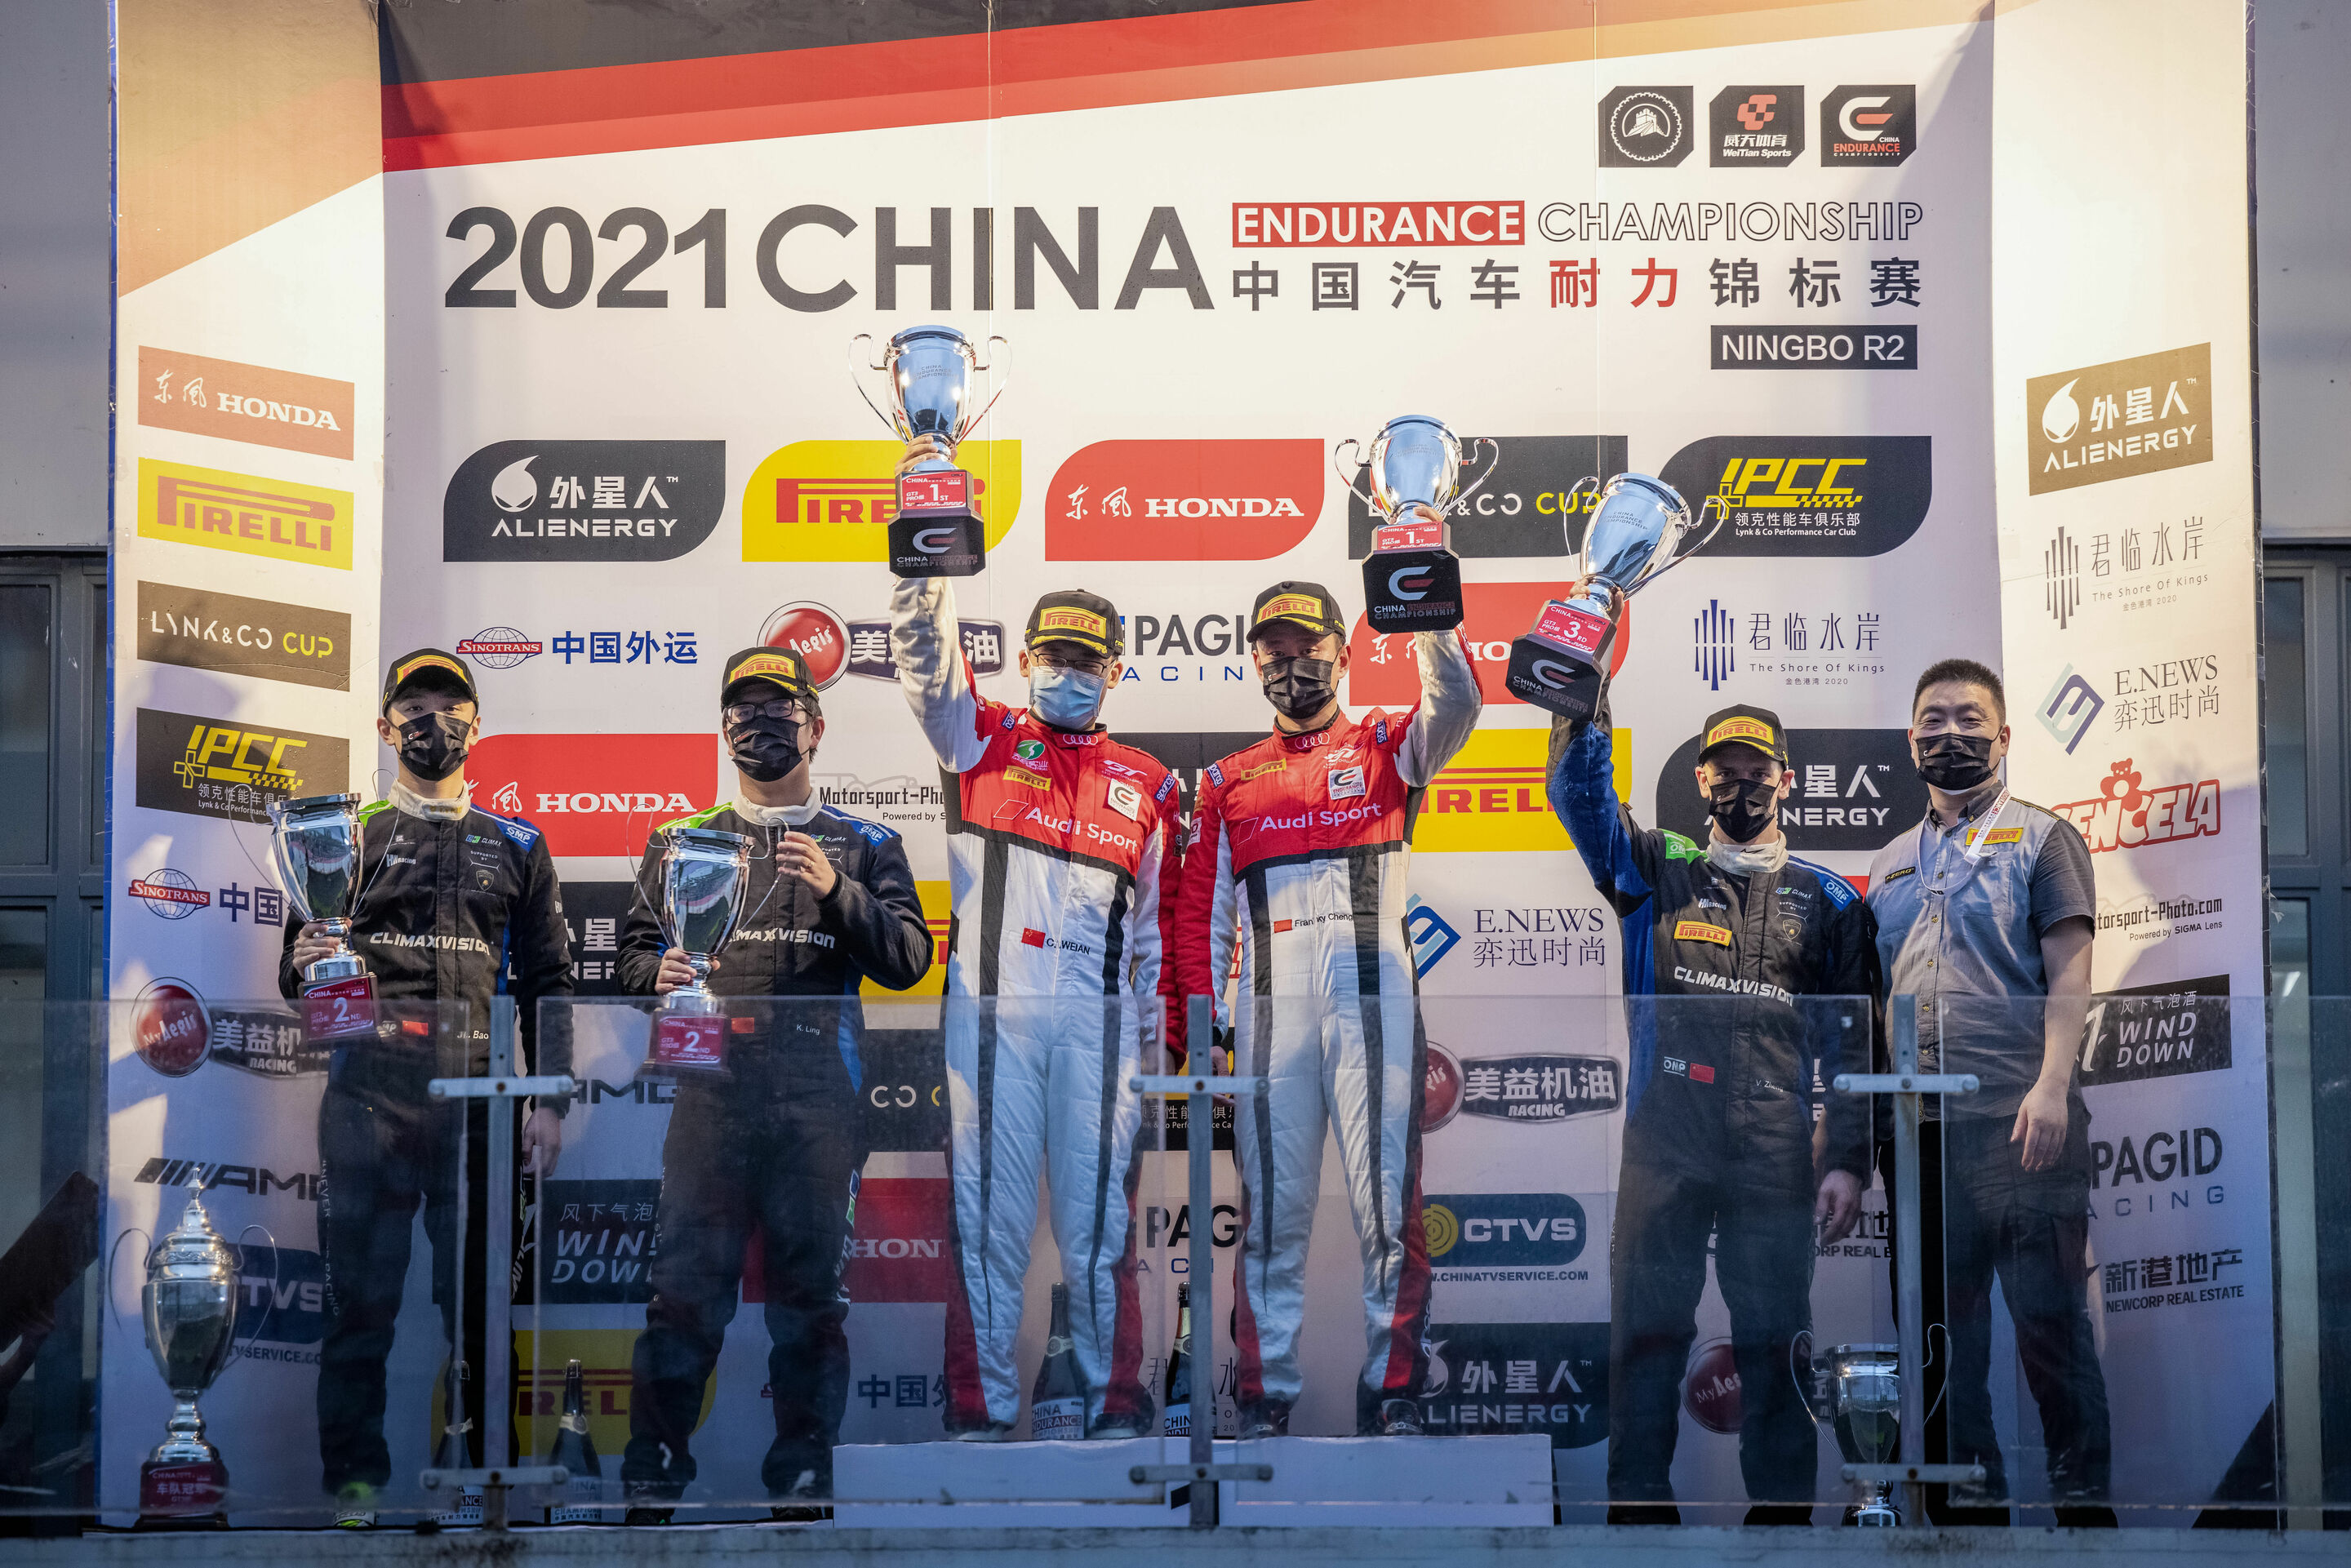 China Endurance Championship 2021